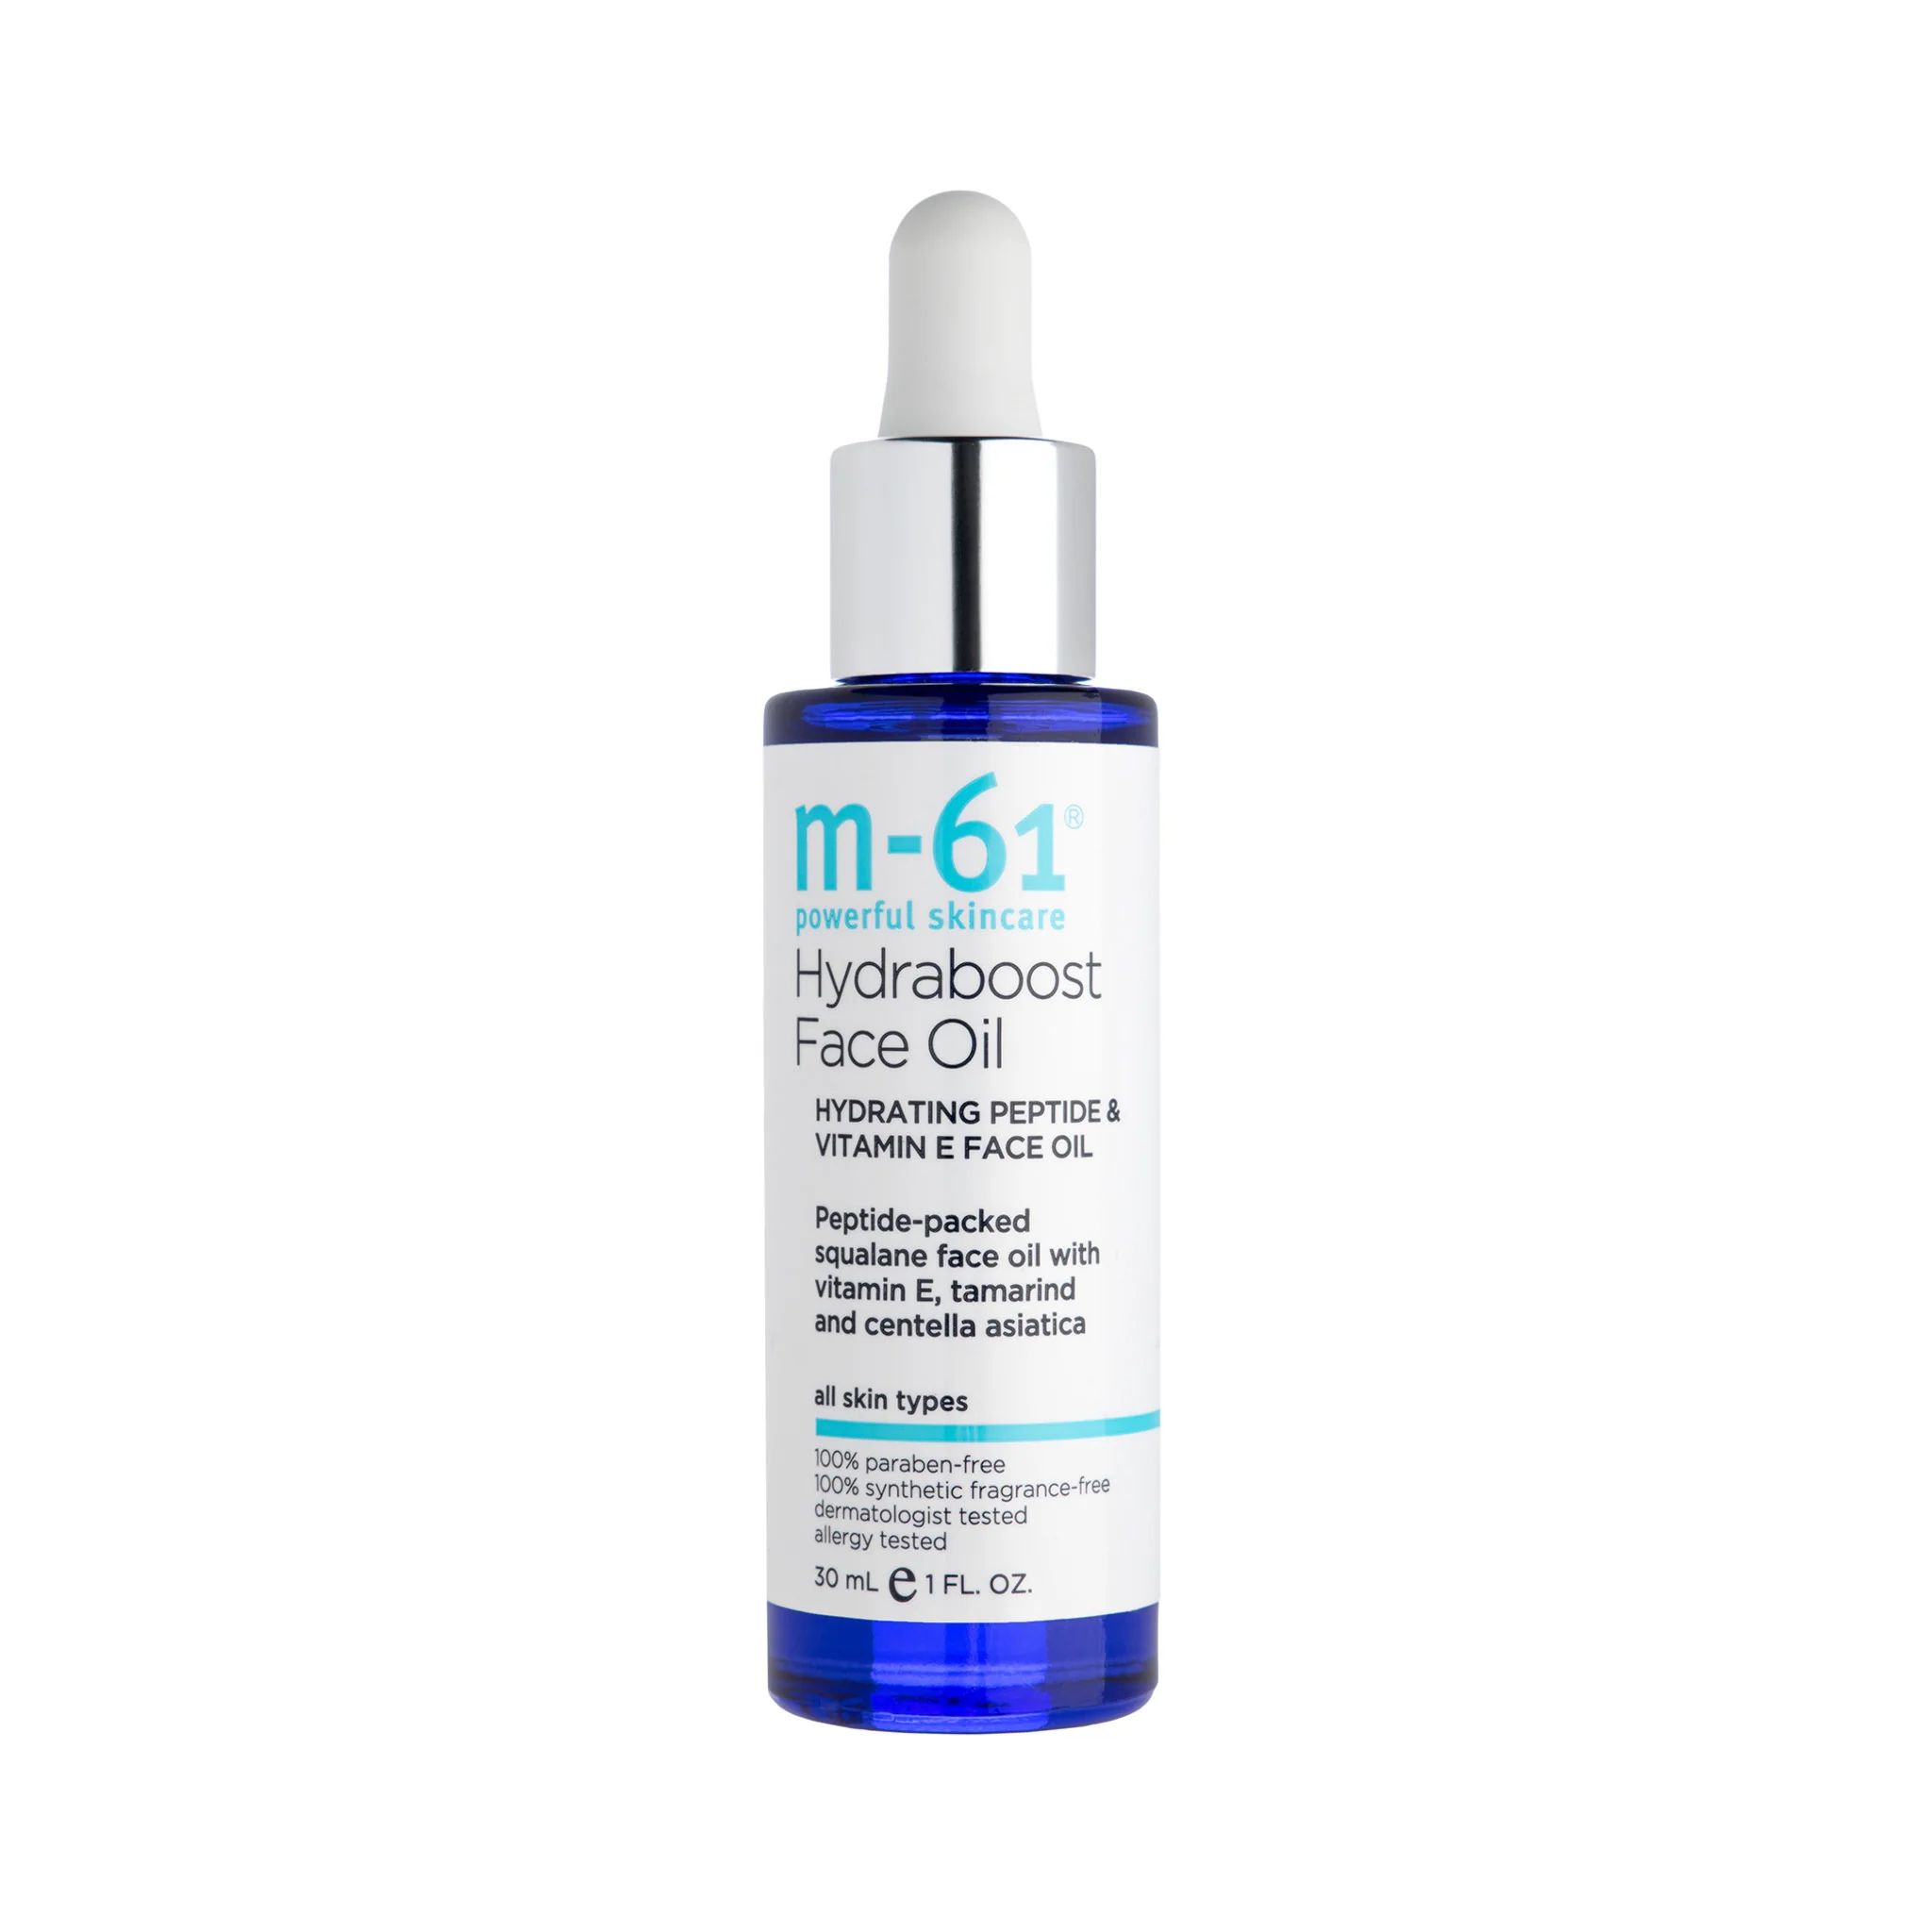 Hydraboost Face Oil | Bluemercury, Inc.